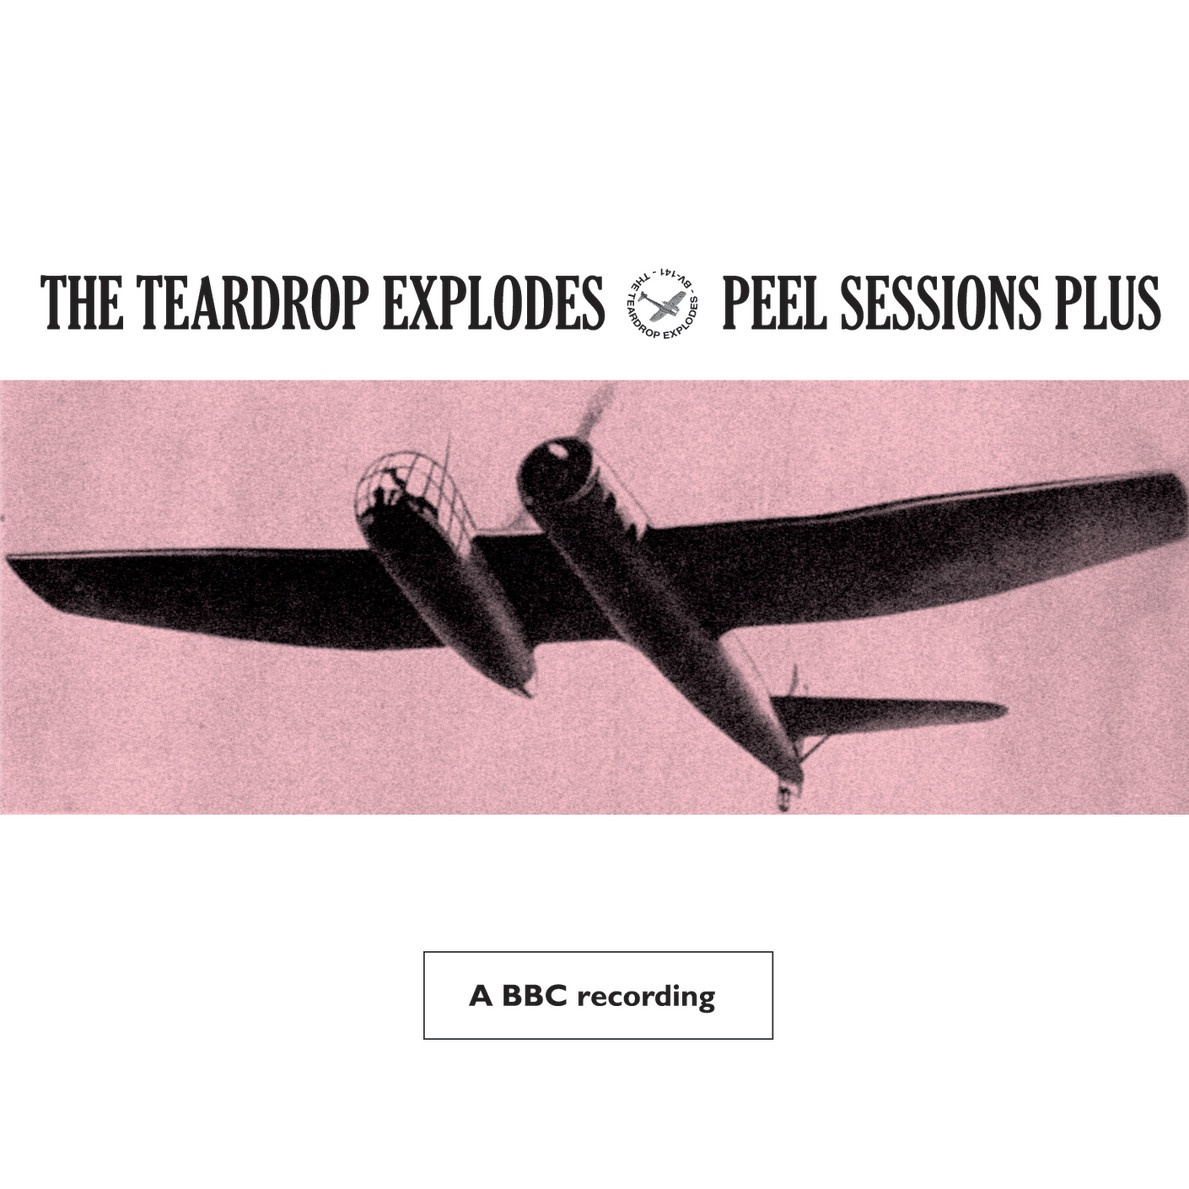 Bent Out Of Shape - BBC Session Peel Plus 1981